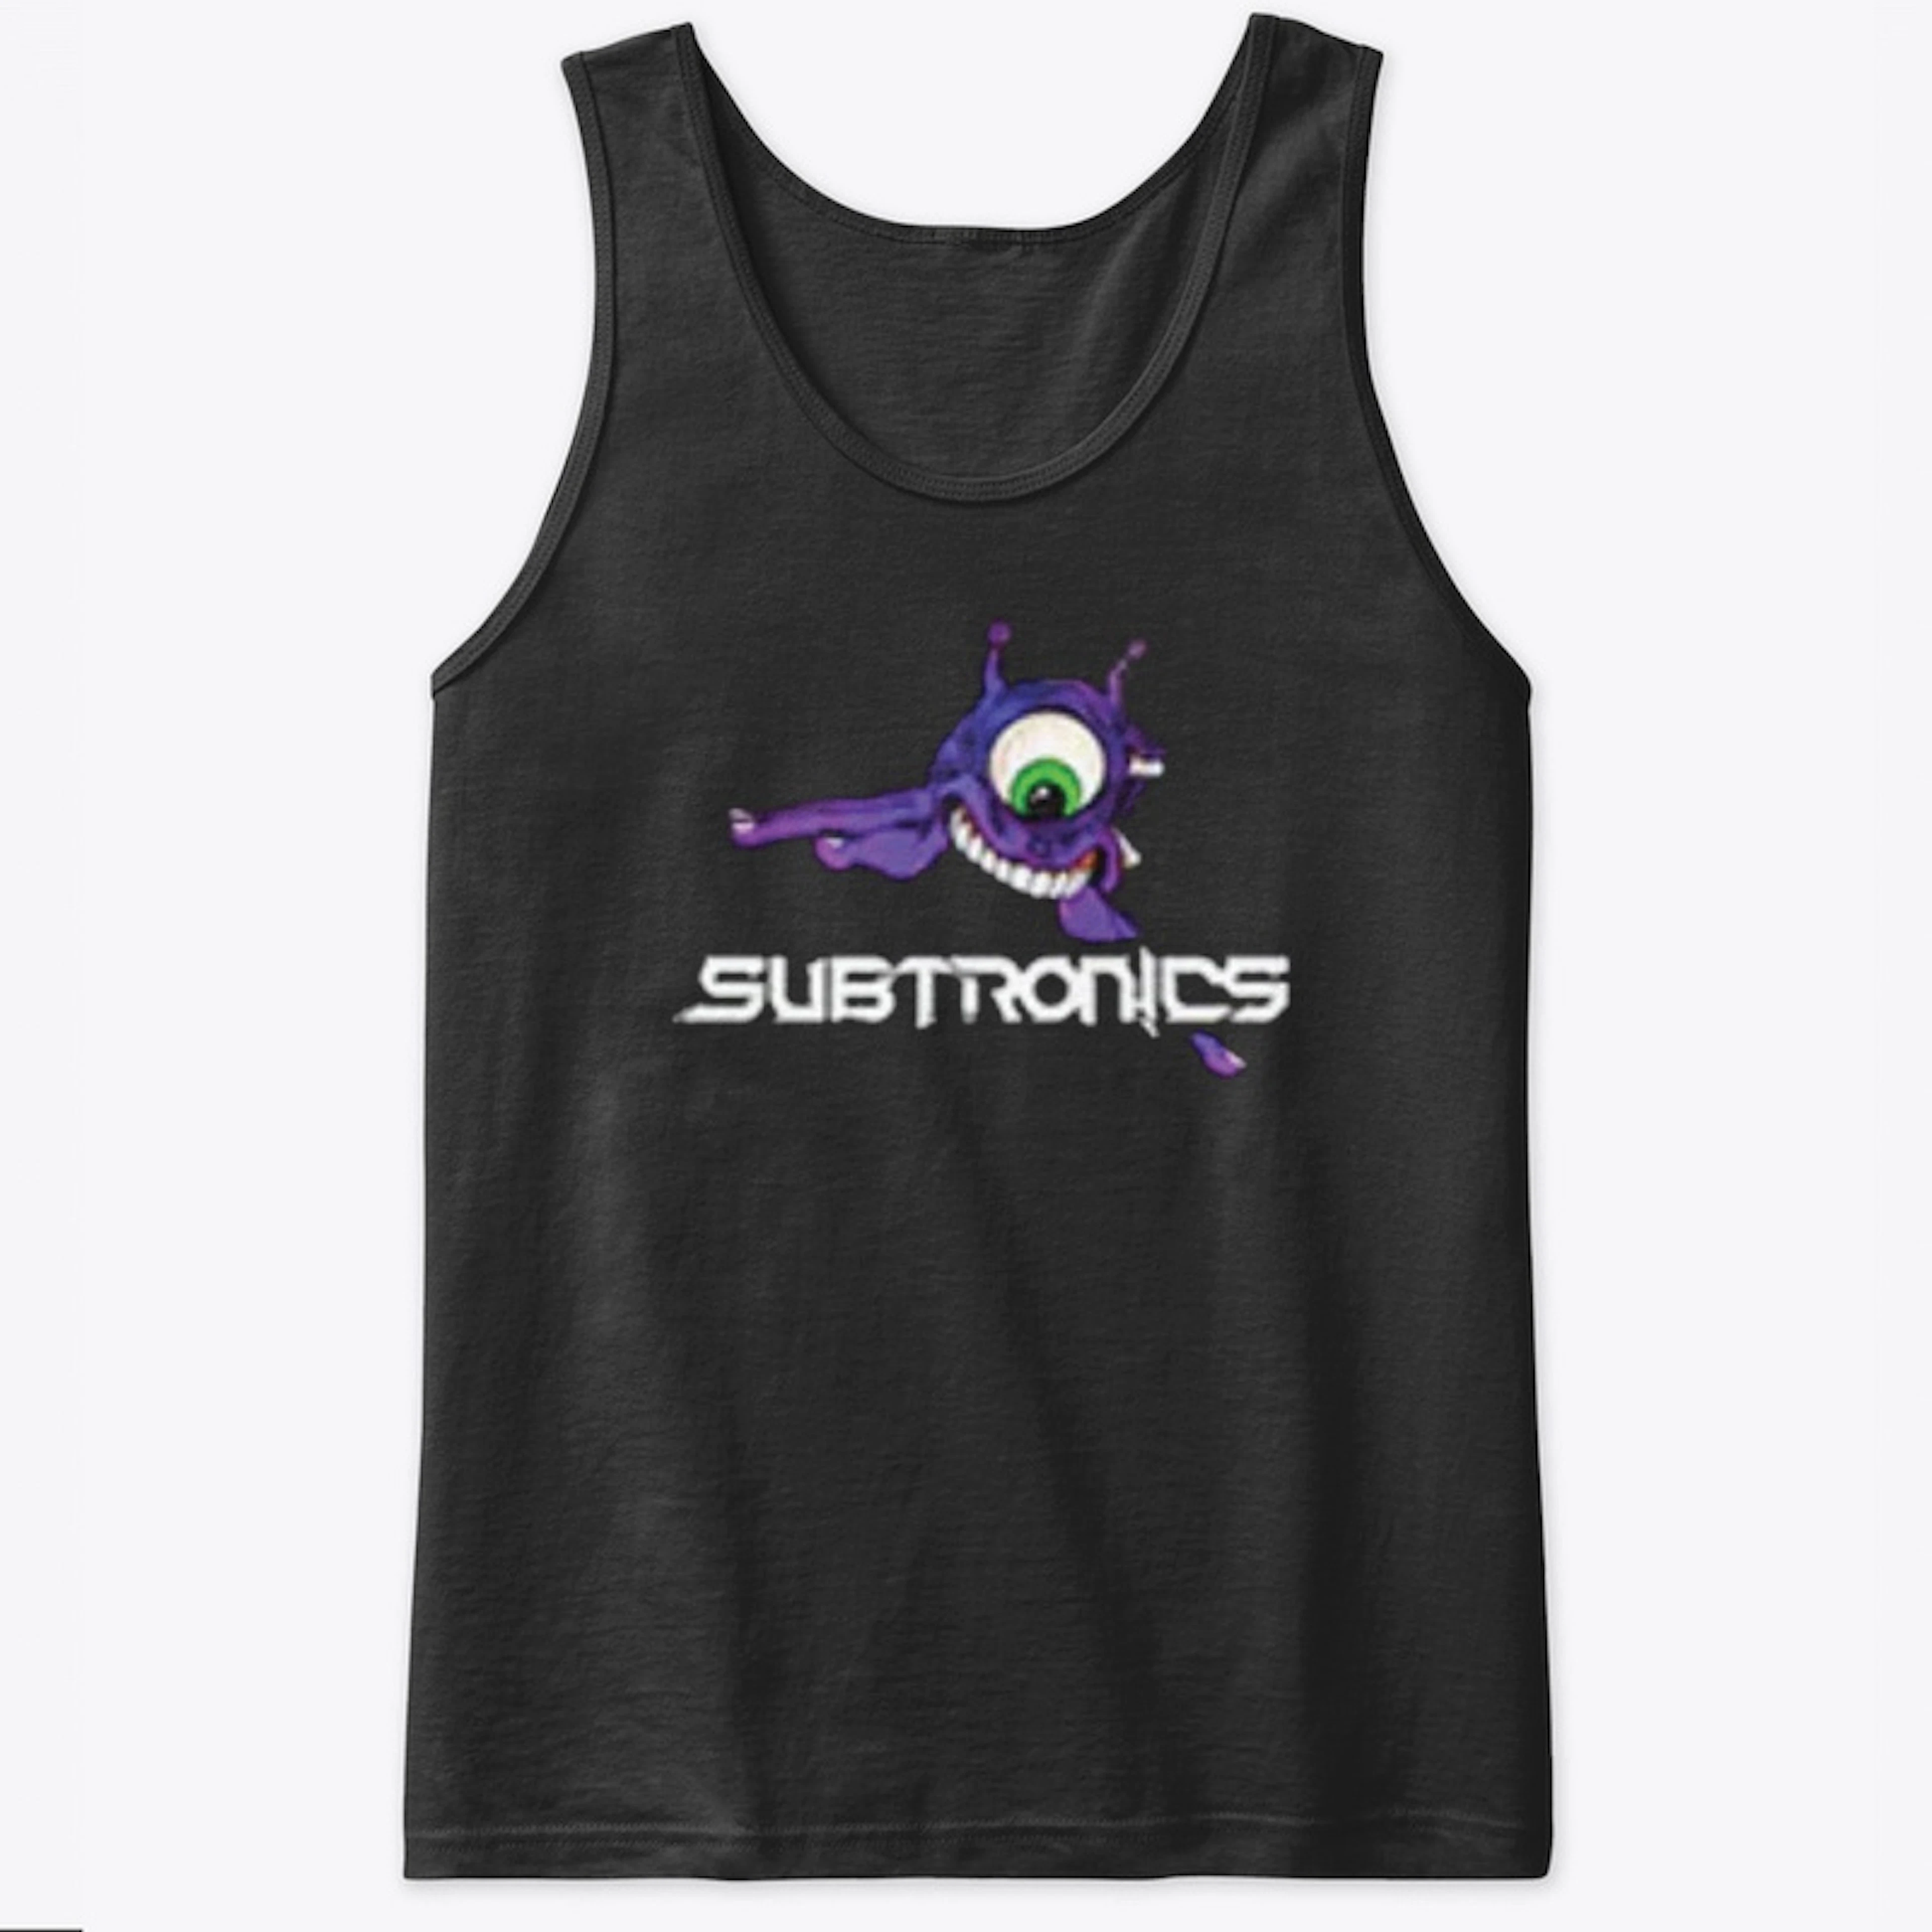 Subtronics Merch